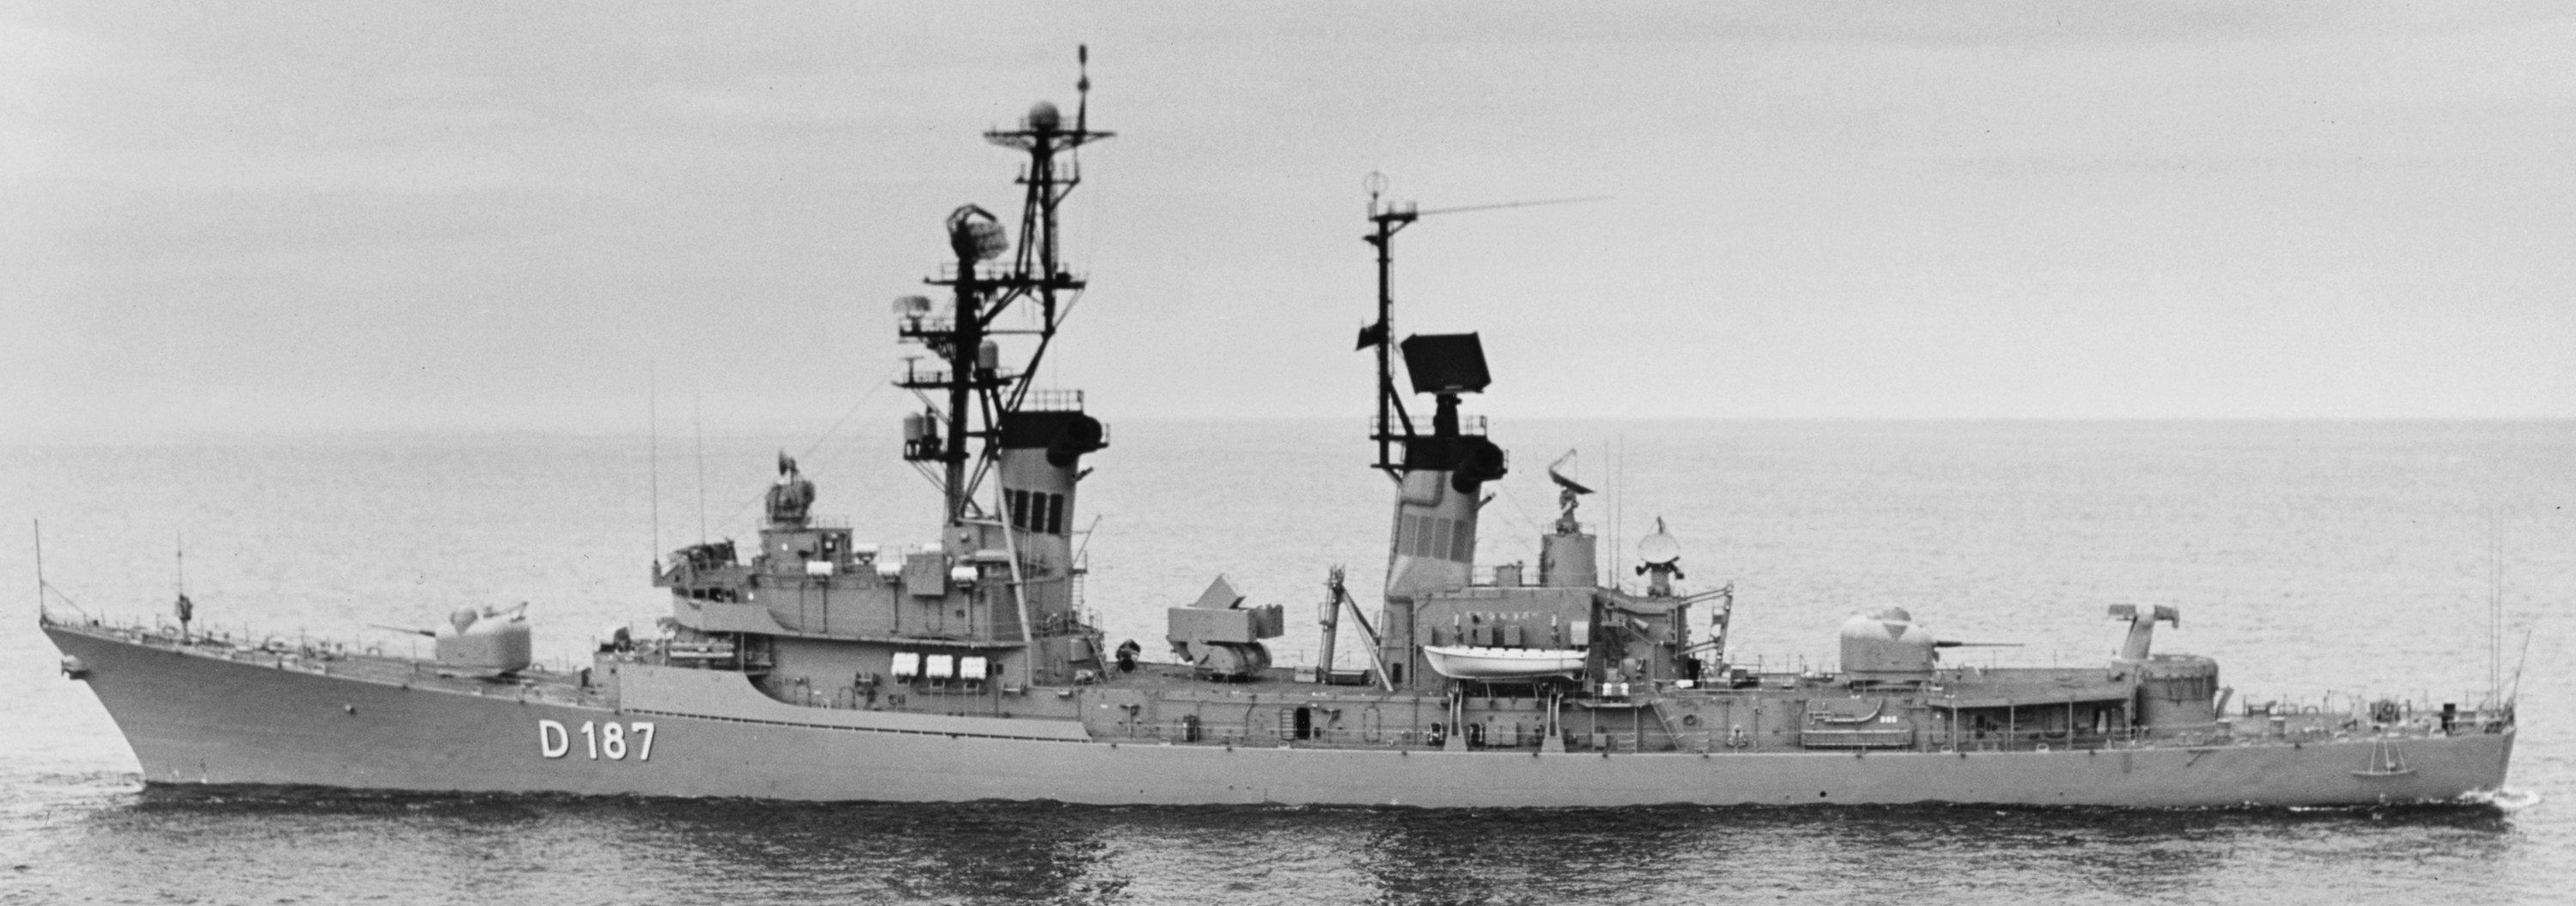 d-187 fgs rommel type 103 lütjens class guided missile destroyer german navy deutsche marine 13